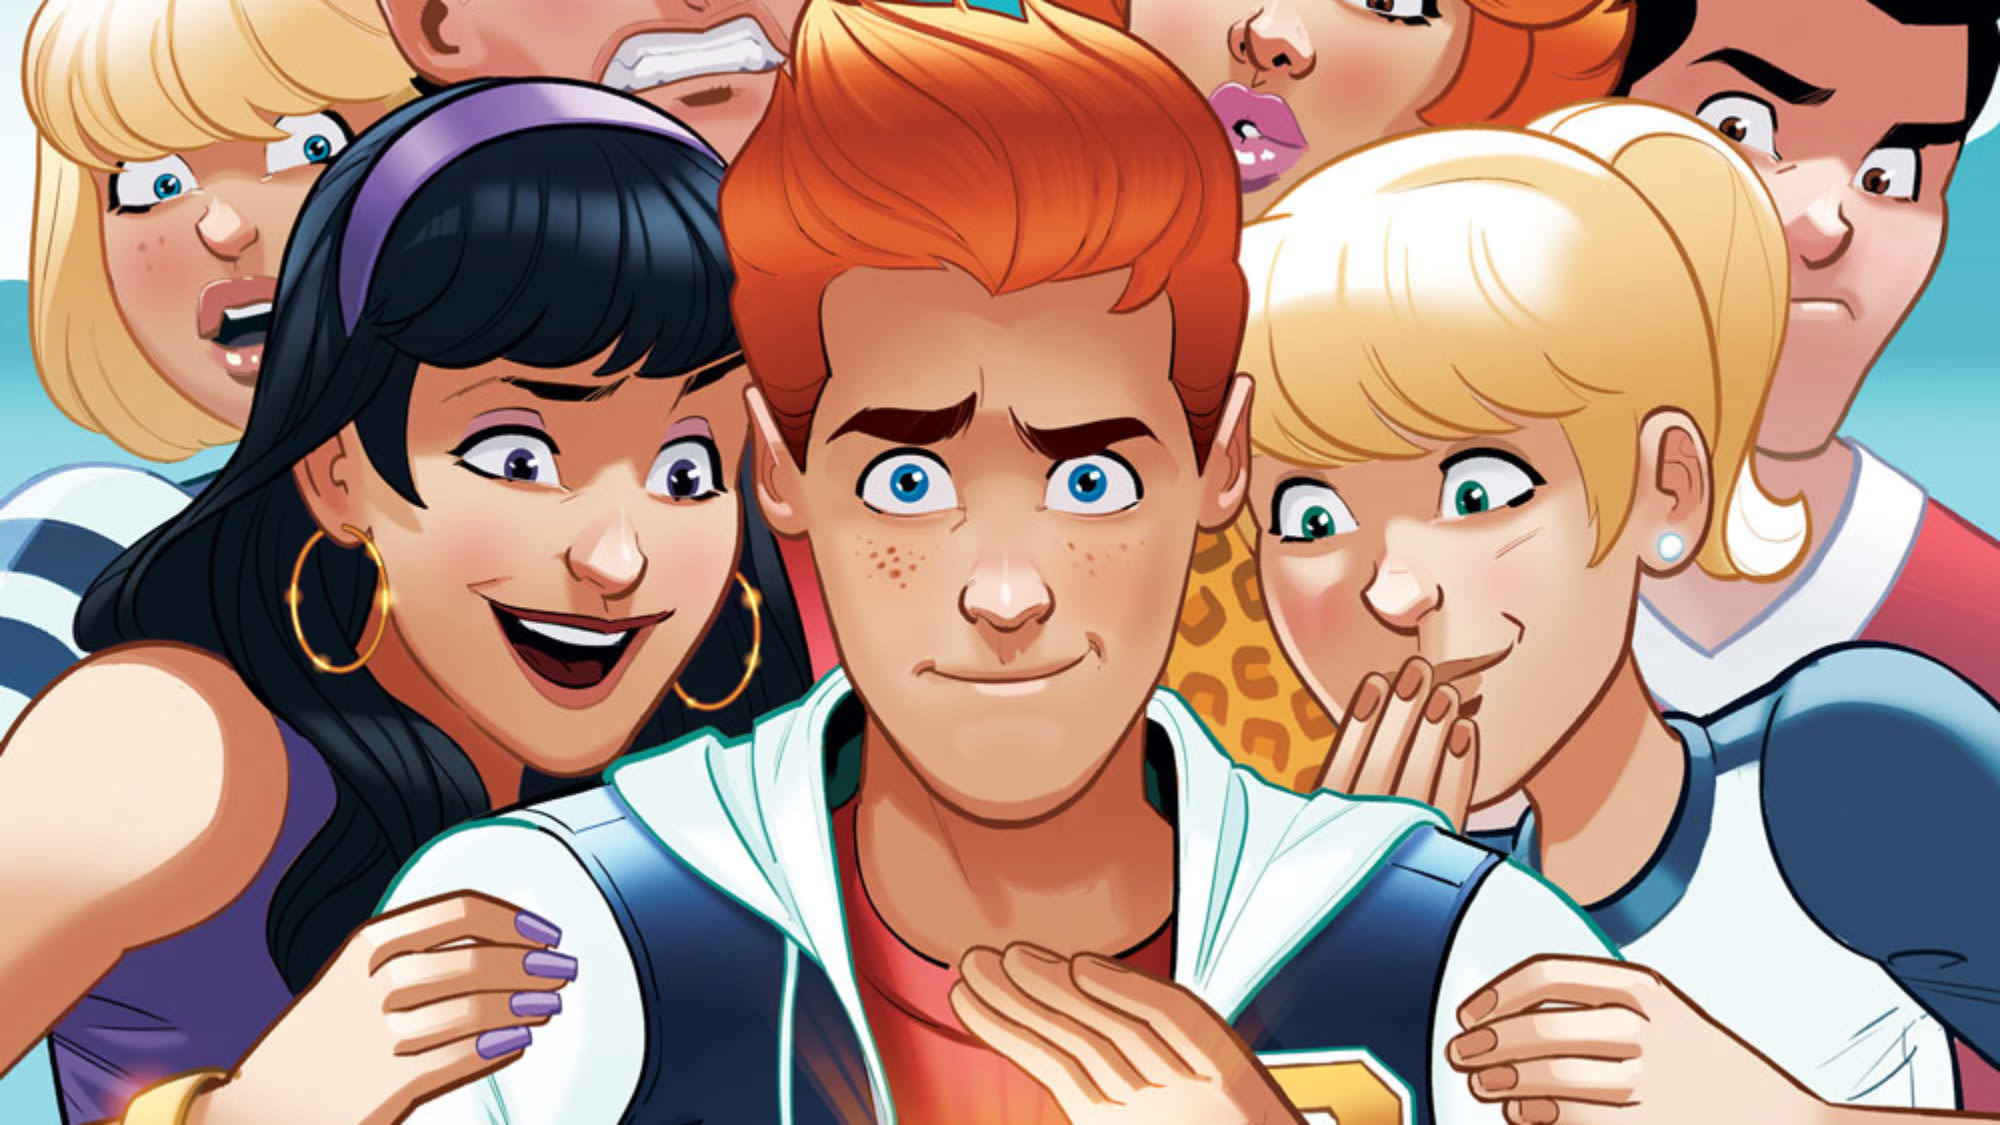 Tom King Writes Archie's Decision, Choosing Between Betty & Veronica